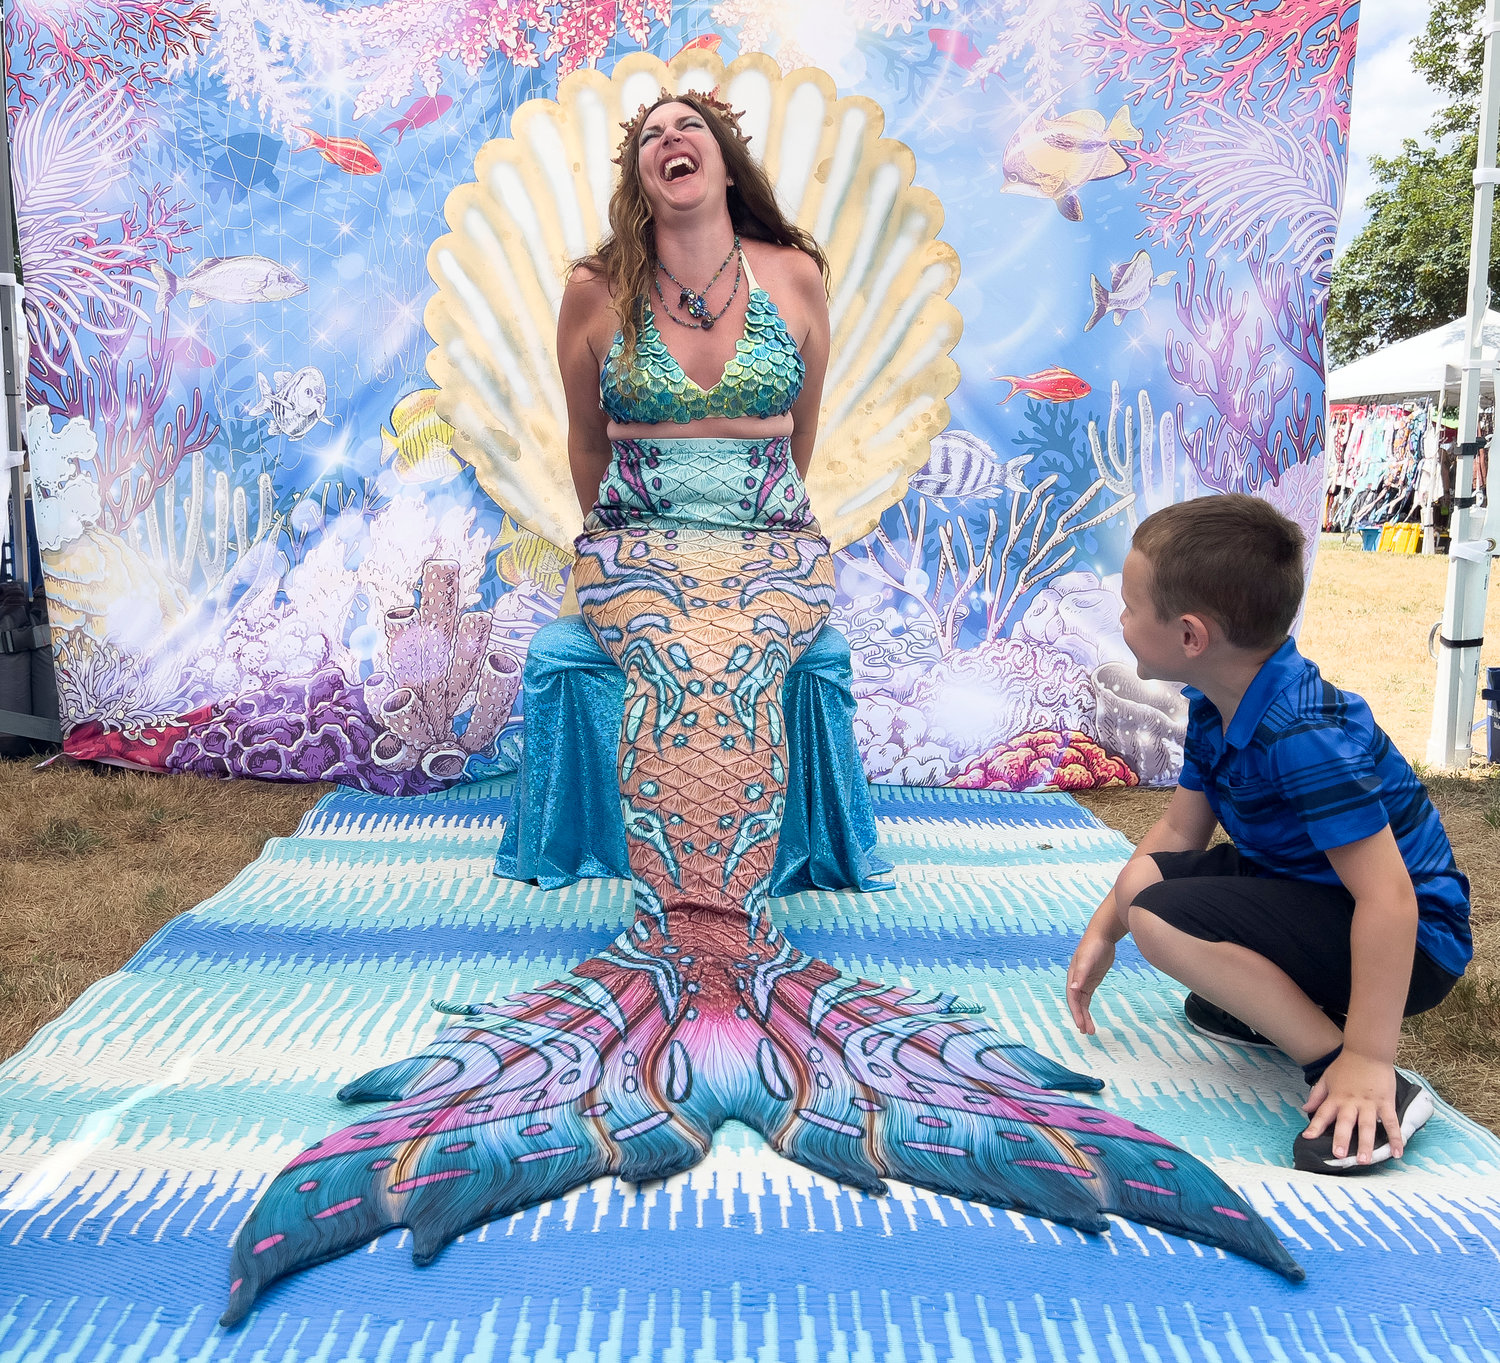 Jessie Jewels, “Ms. Mermaid Rhode Island 2021-22,” shares a laugh with Ryatt Bonalewicz at her tent.